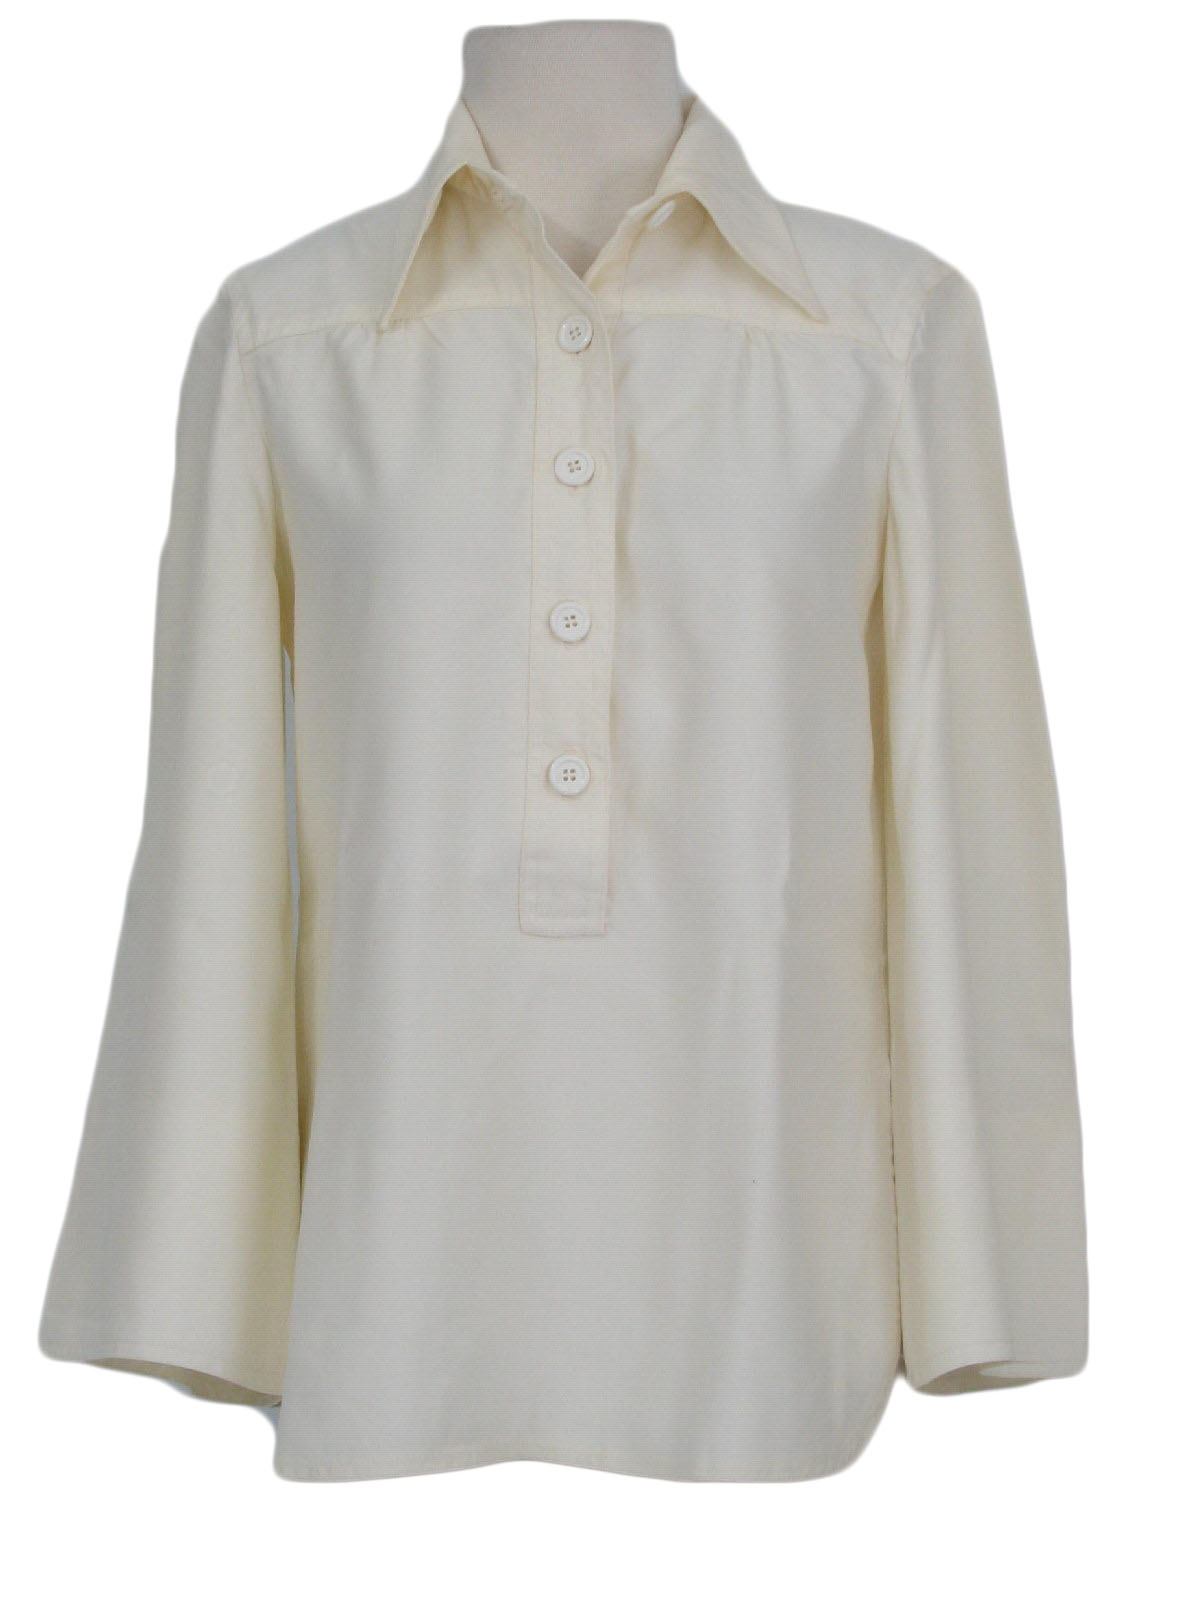 Vintage 70s Hippie Shirt: 70s -no label- Womens cream cotton polyester ...